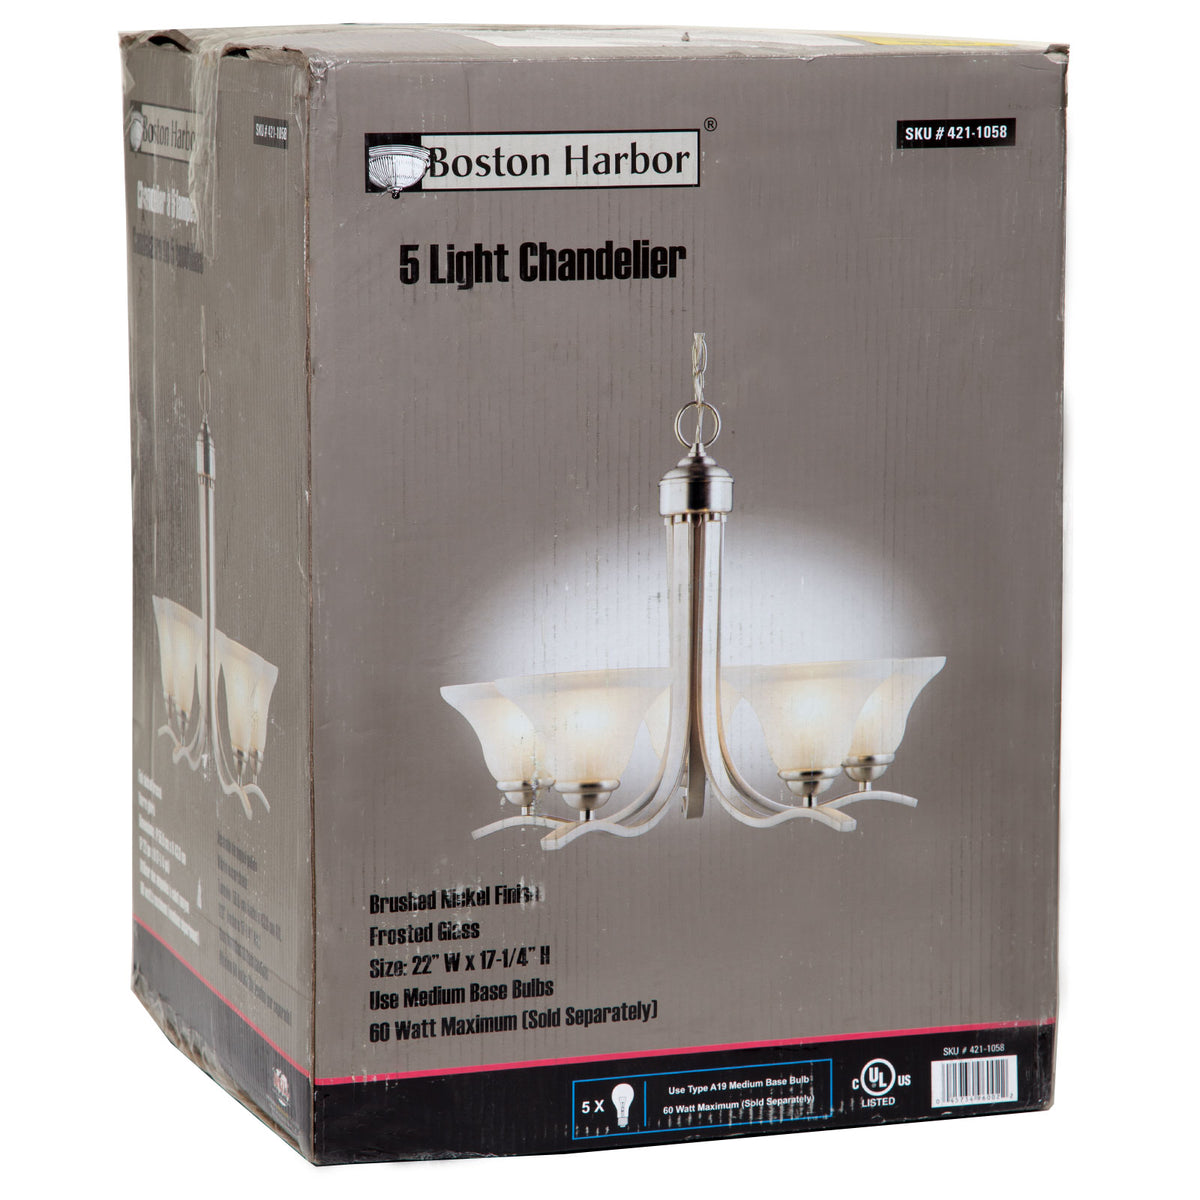 buy chandeliers light fixtures at cheap rate in bulk. wholesale & retail lamp replacement parts store. home décor ideas, maintenance, repair replacement parts